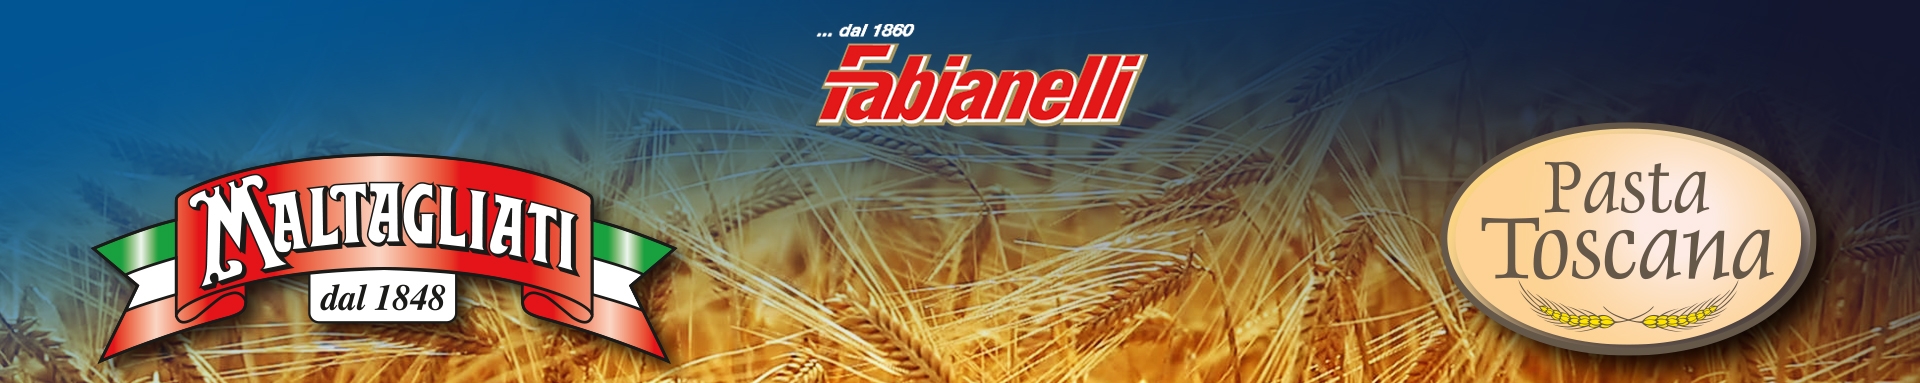 Fabianelli